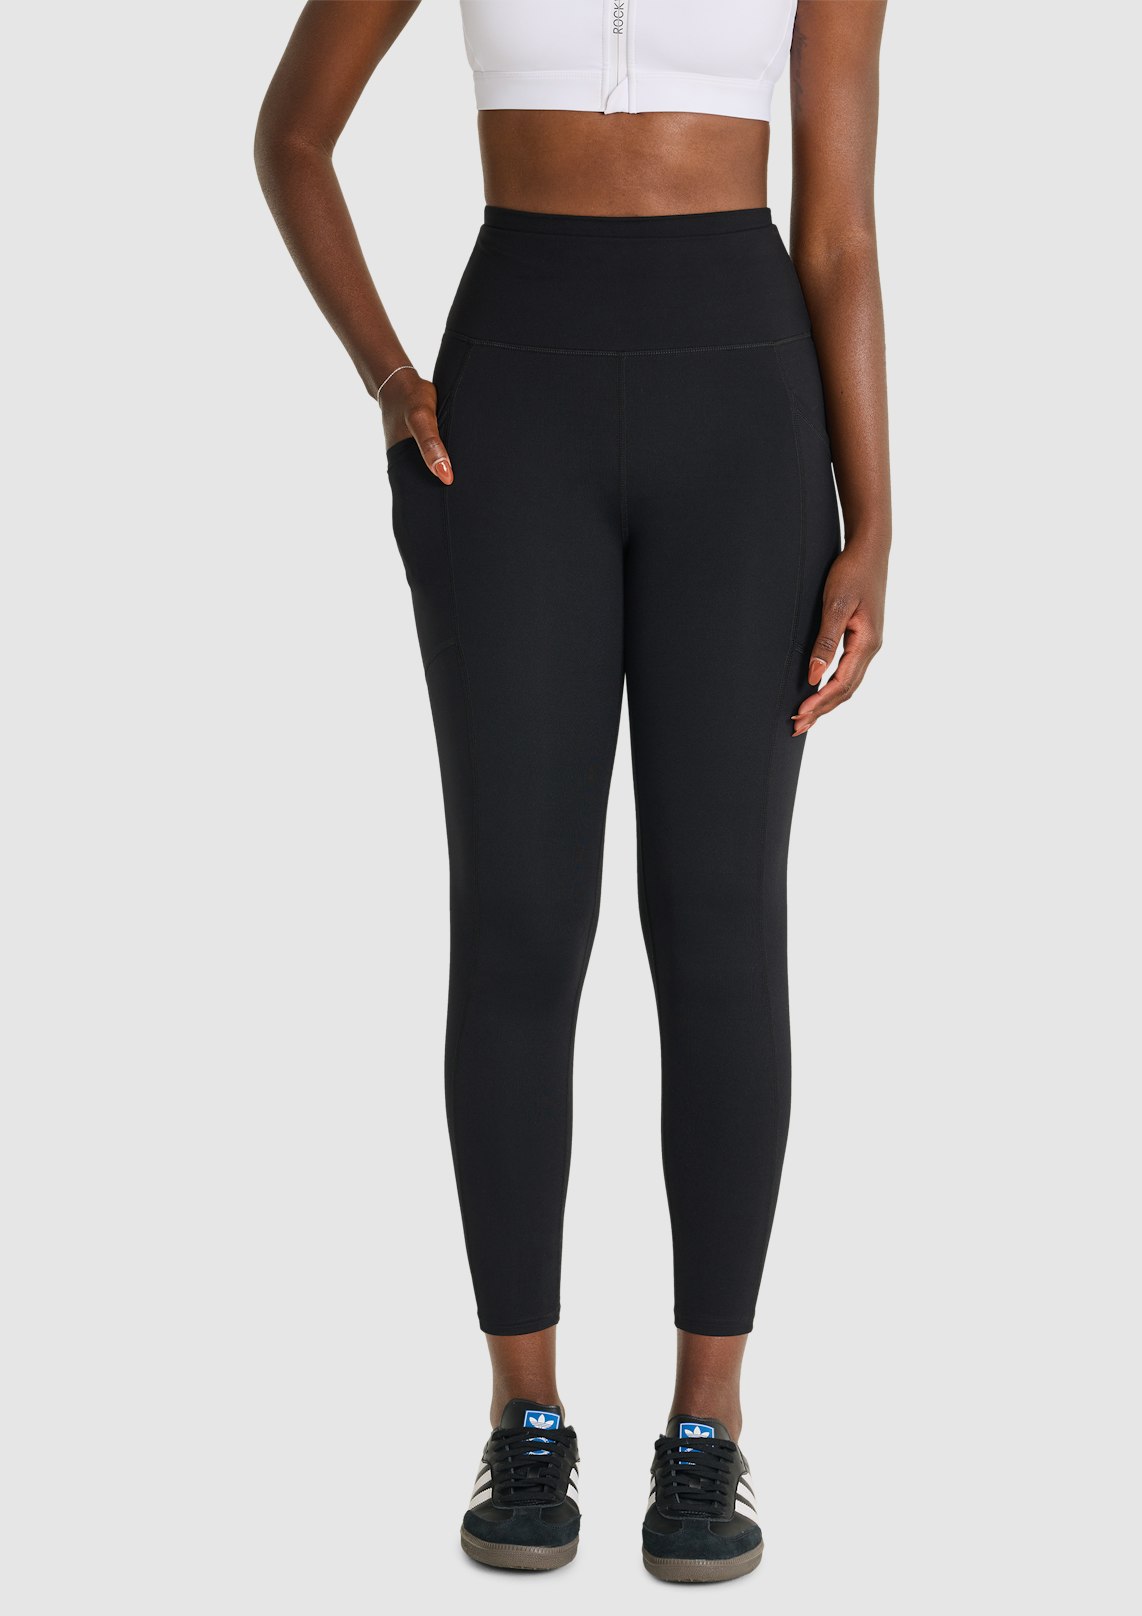 Lululemon Womens Yoga Gym 30 Mid rise leggings pockets Size 12 Black 